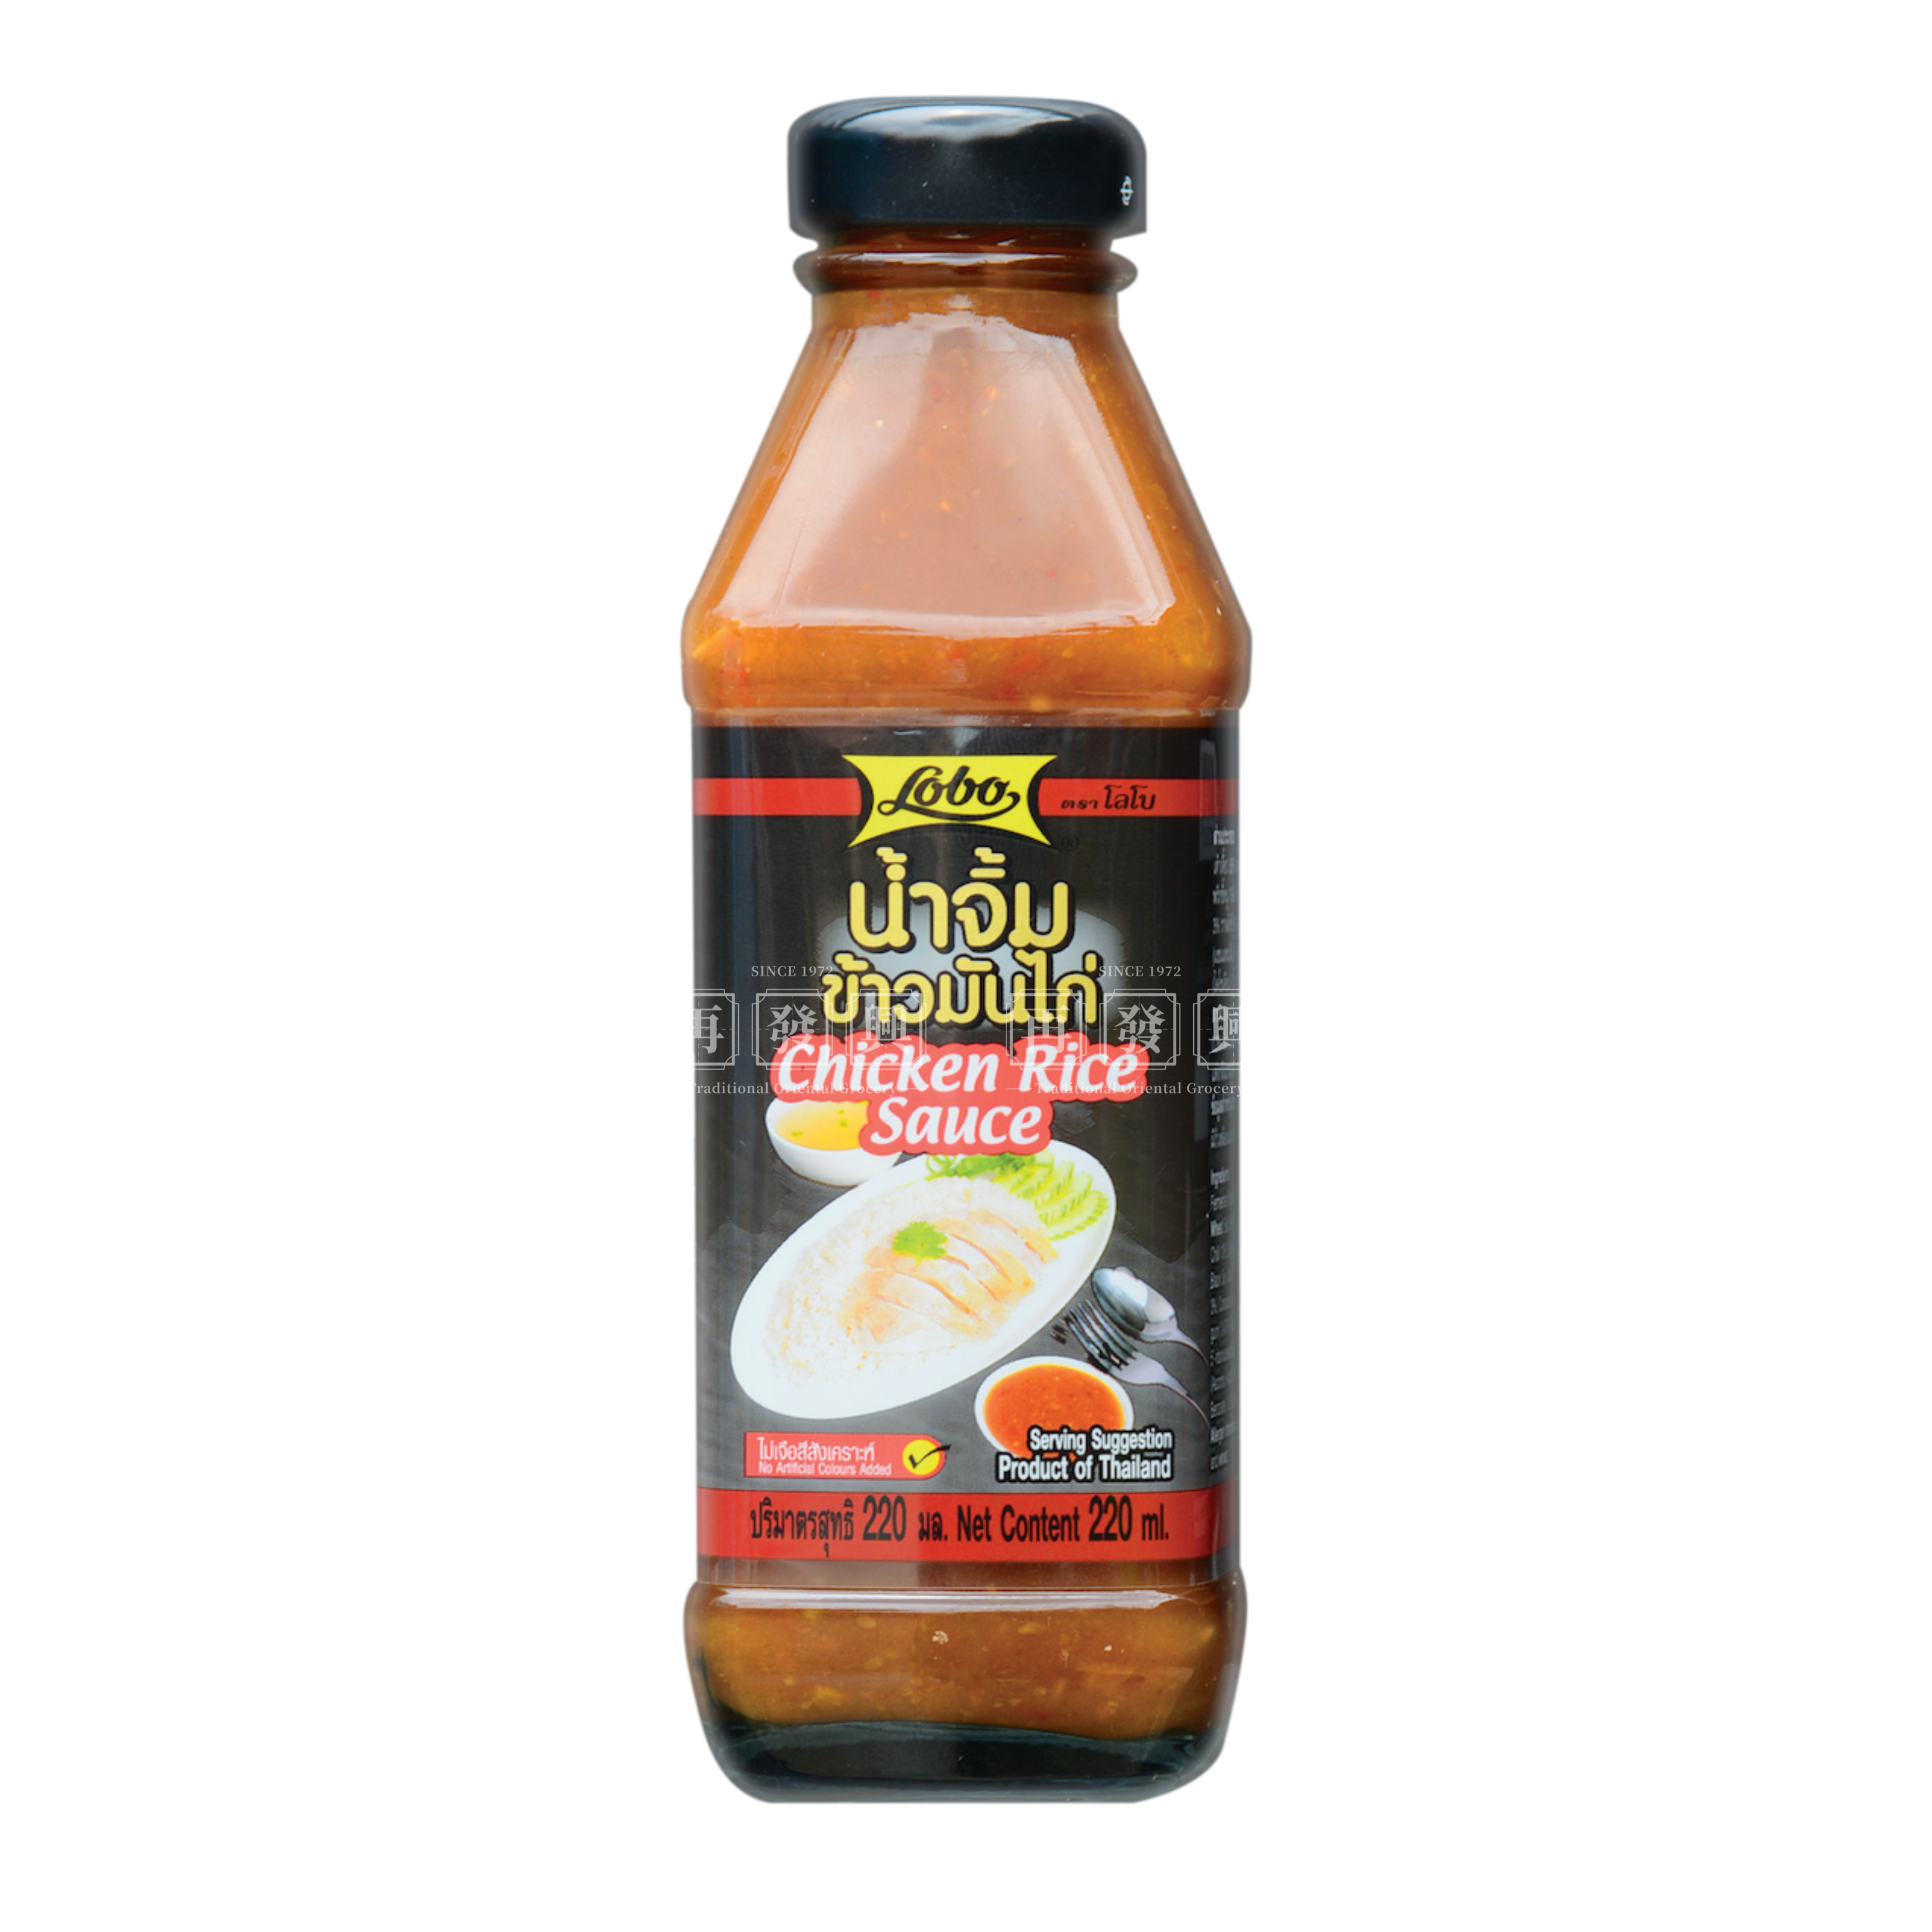 Globo Thailand Chicken Rice Sauce 泰国海南鸡饭酱 220ml